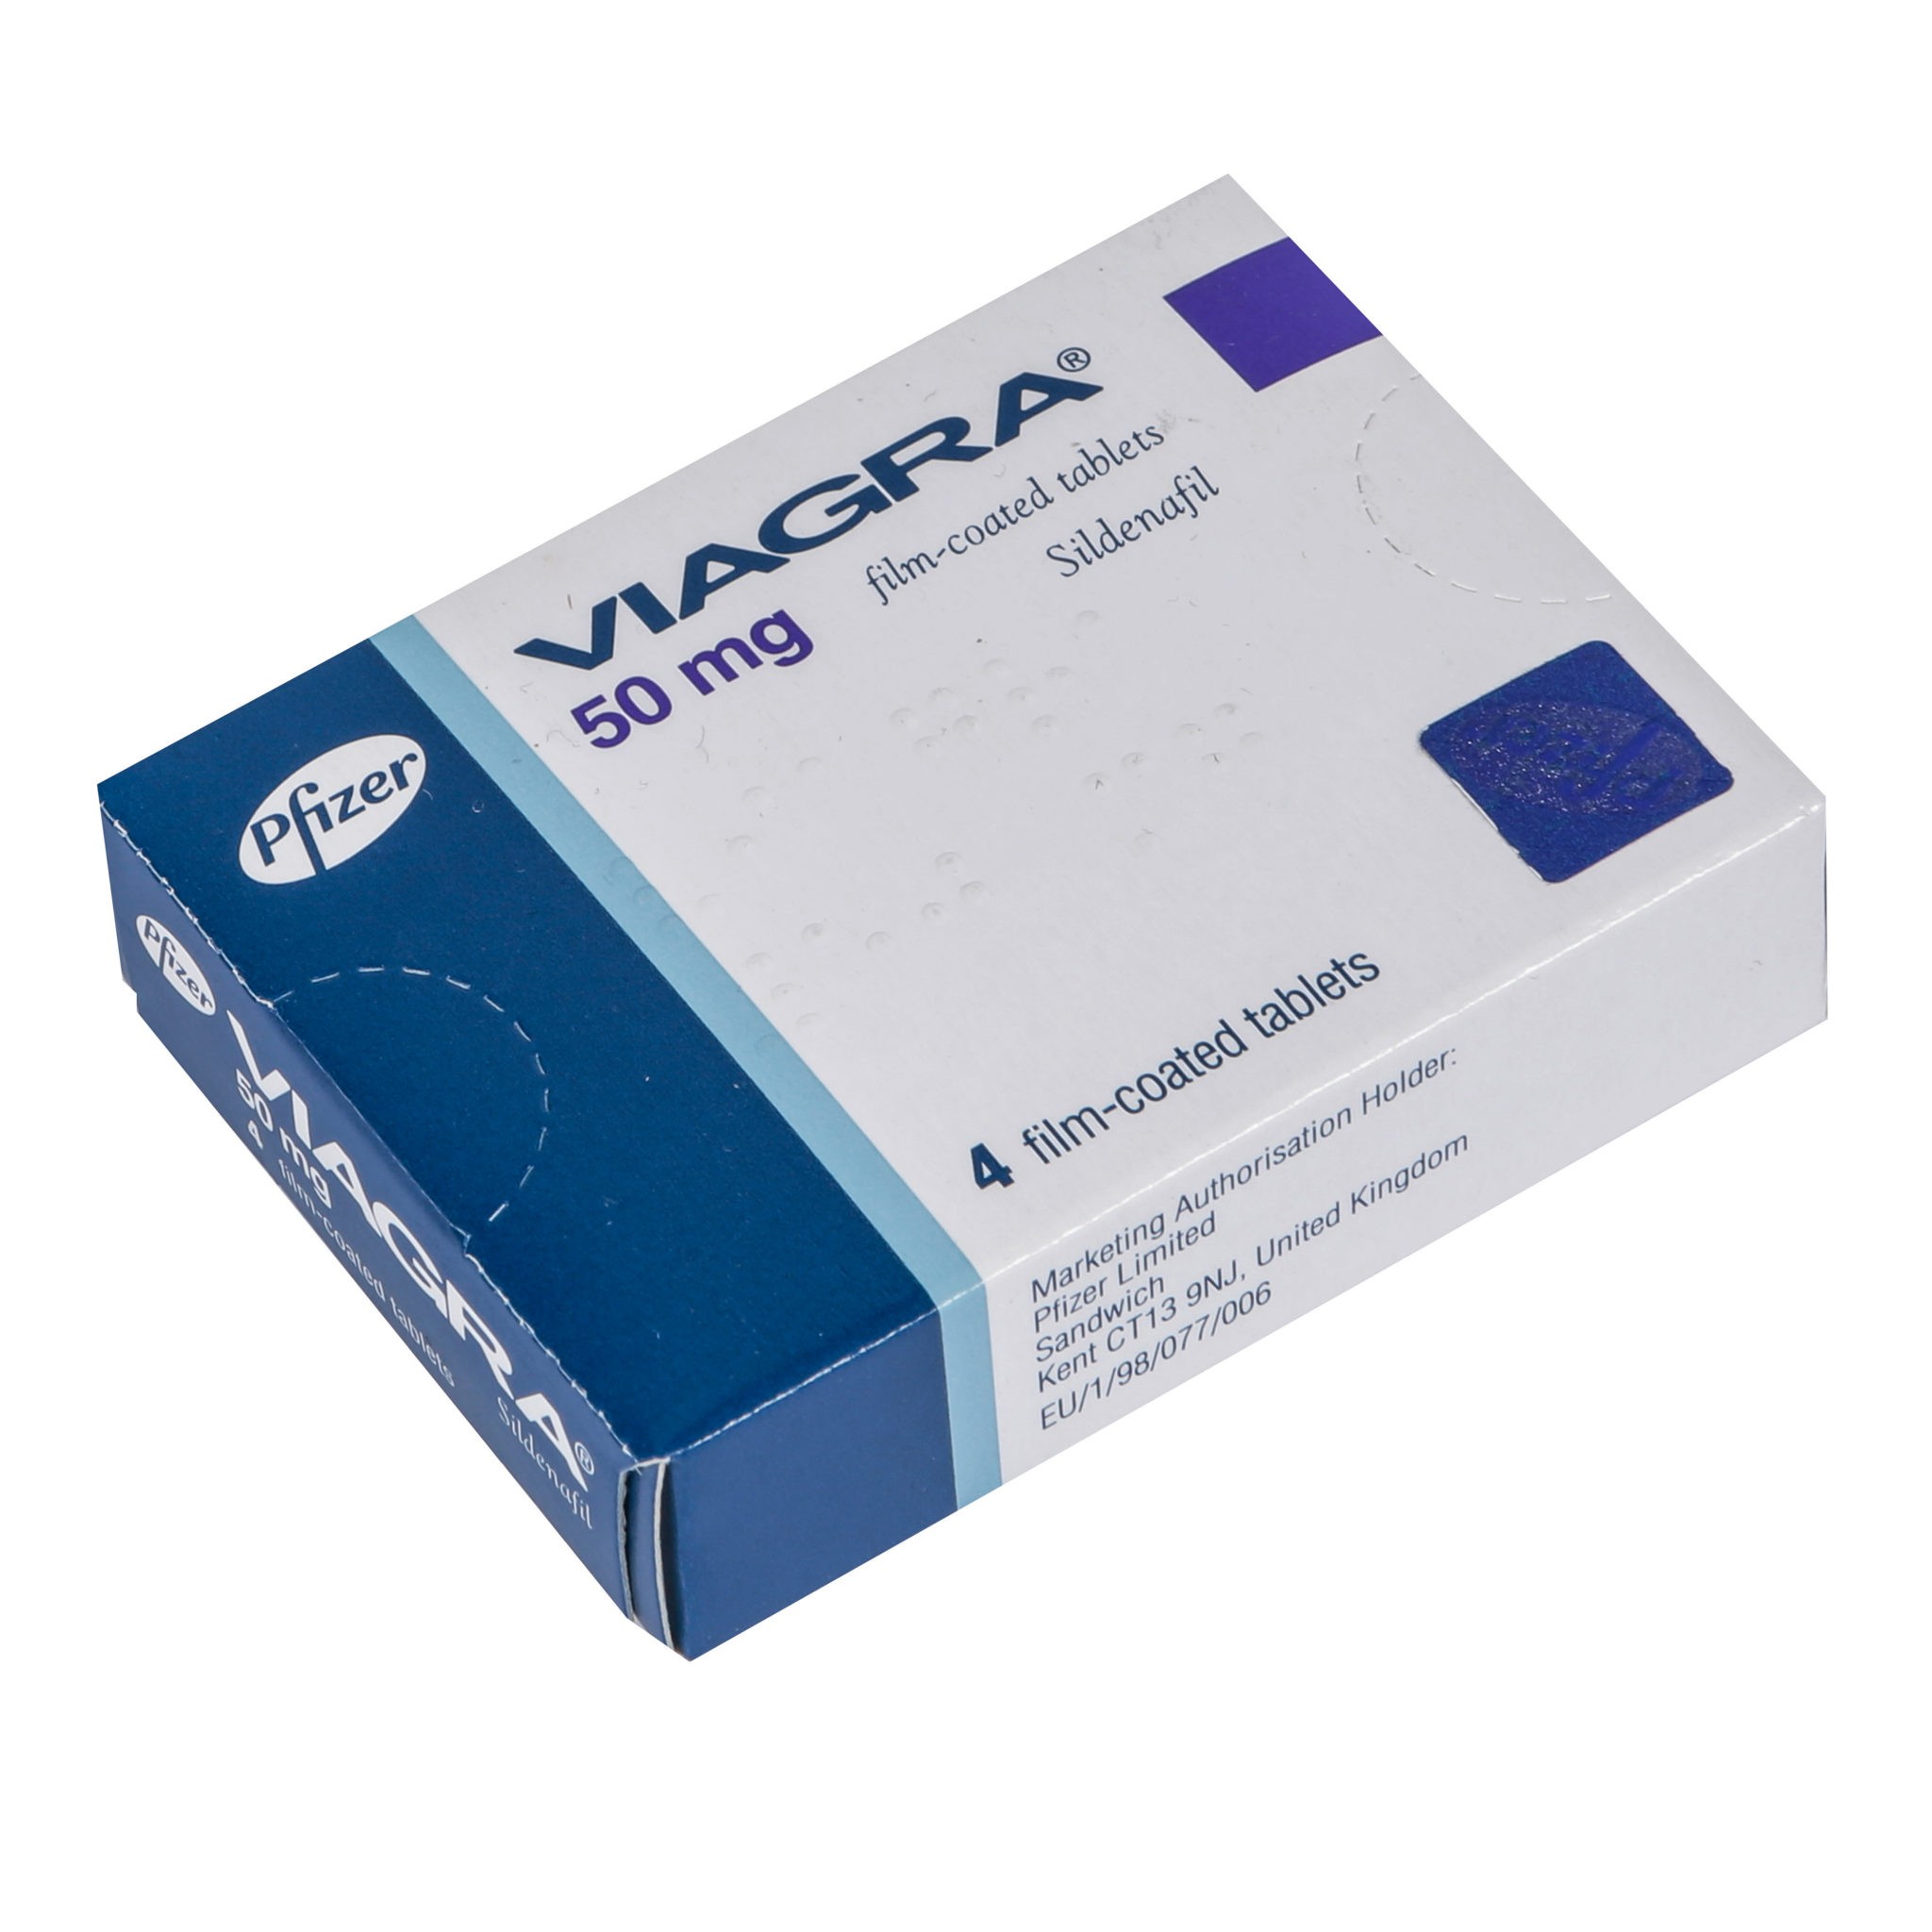 Viagra 50mg Tablets (8 Tablets)